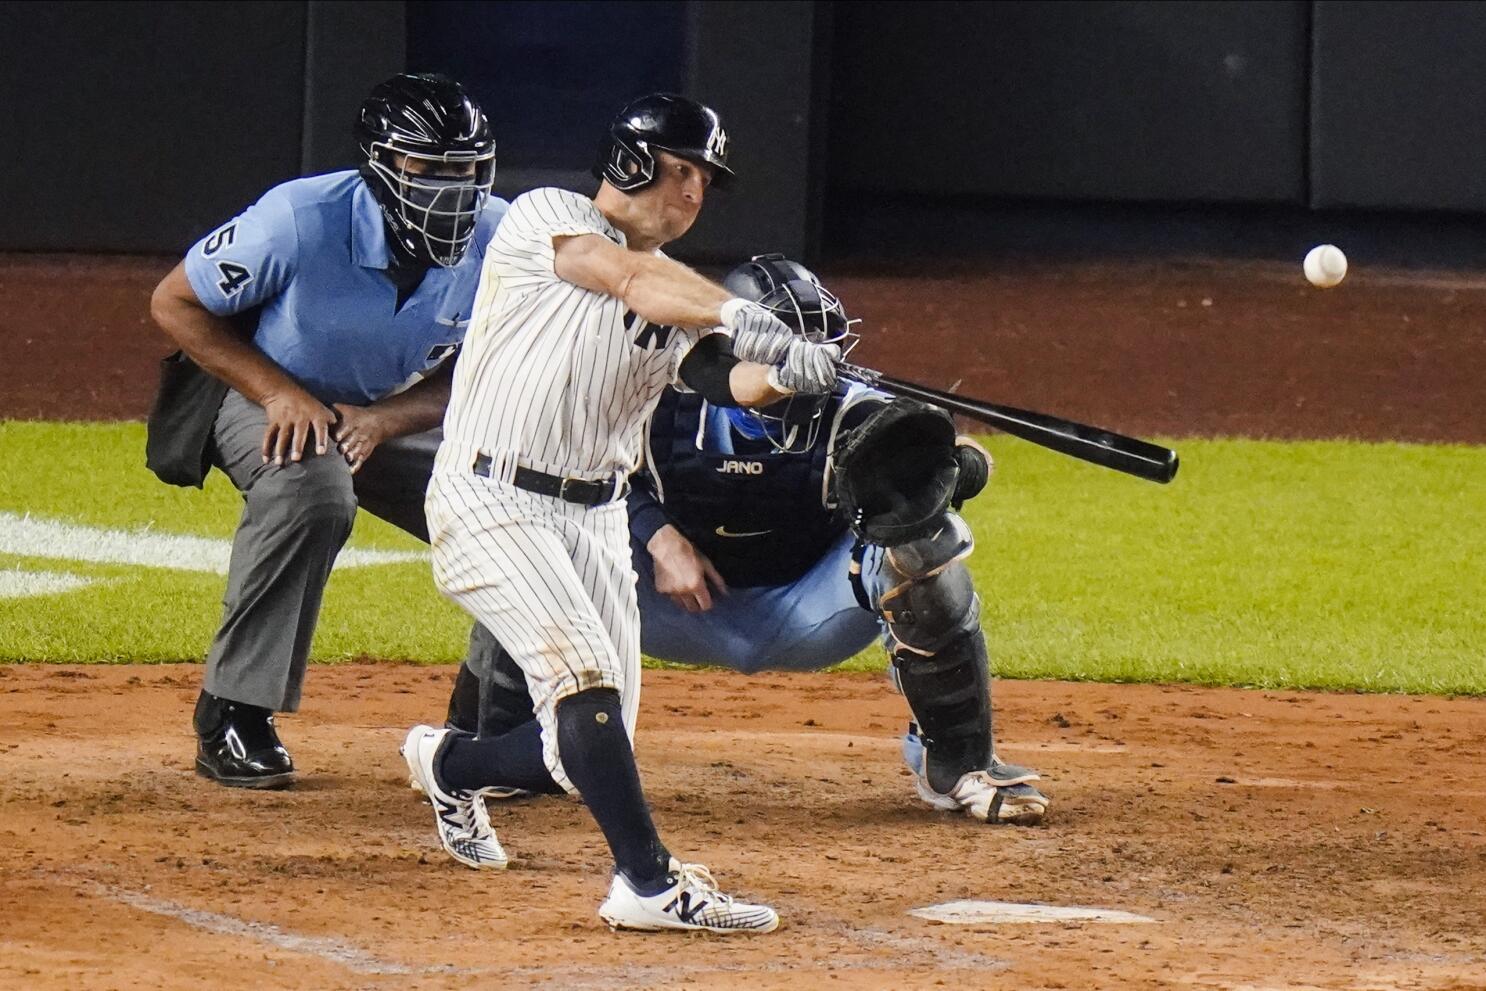 Brett Gardner thrown out of game as New York Yankees' win streak ends